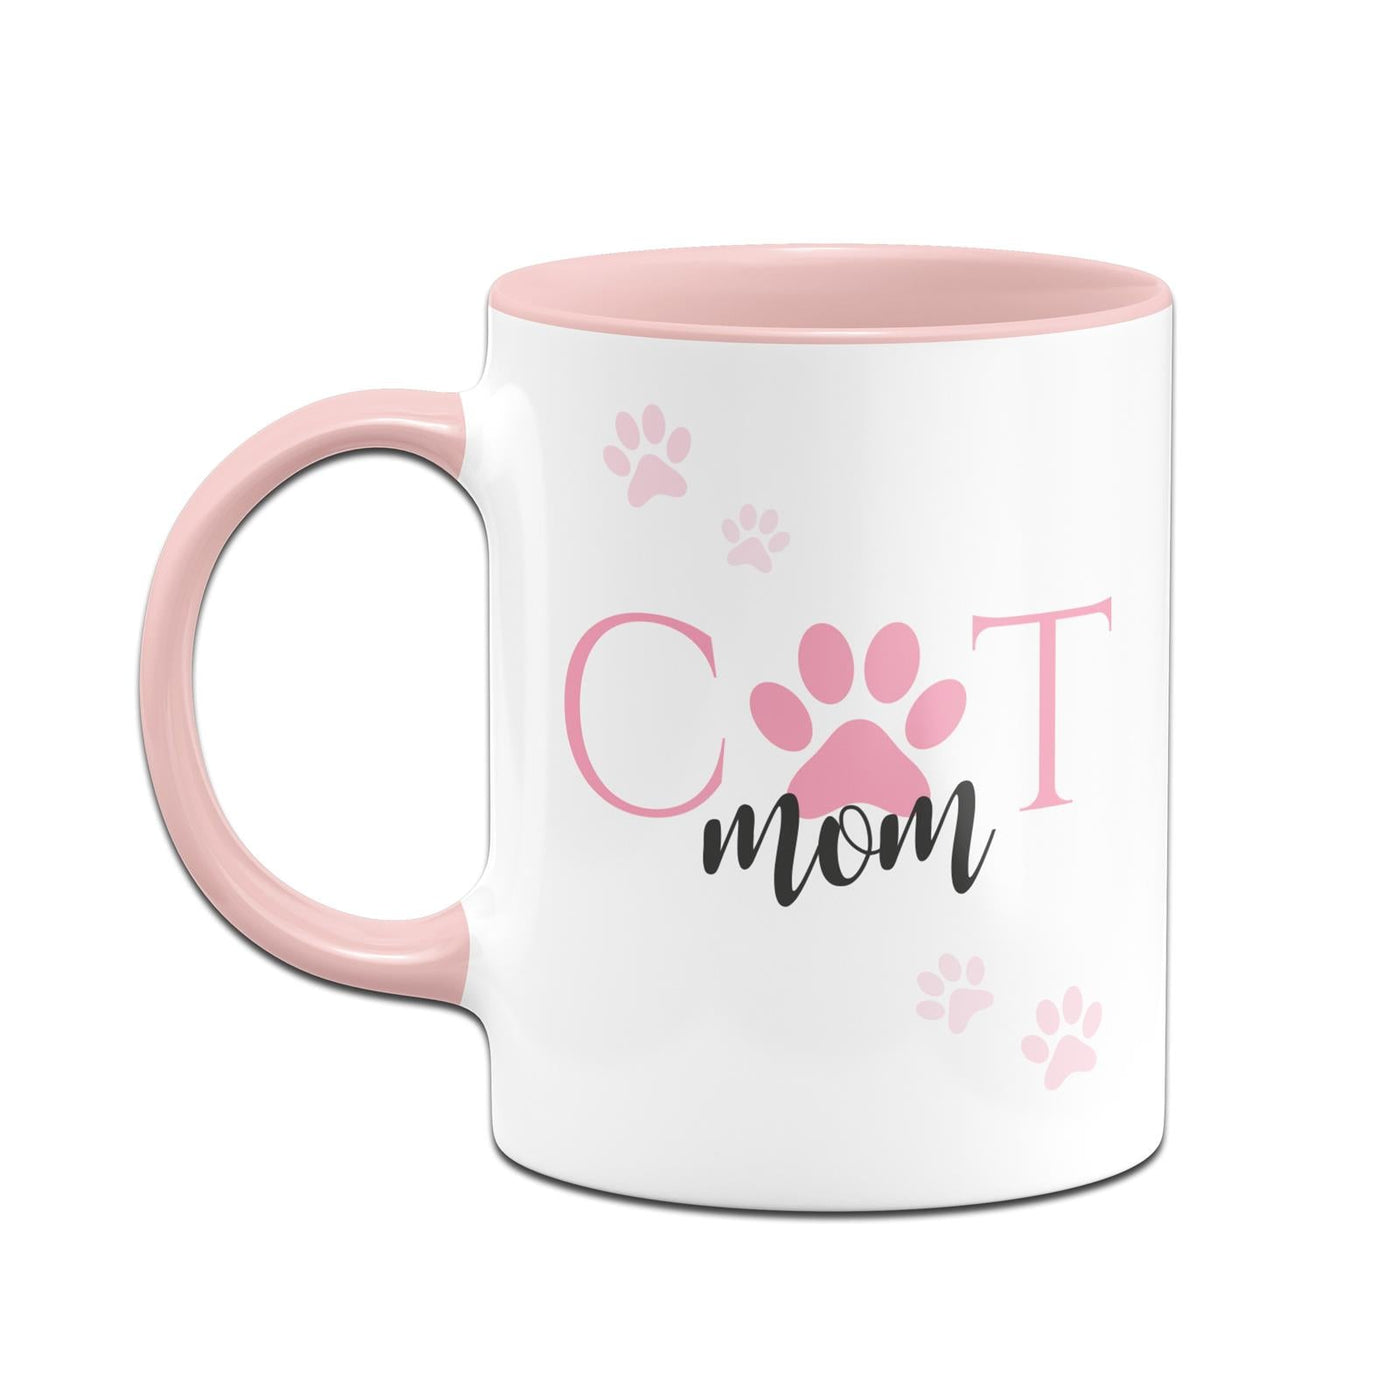 Bild: Tasse - Cat Mom 🐱 Geschenkidee